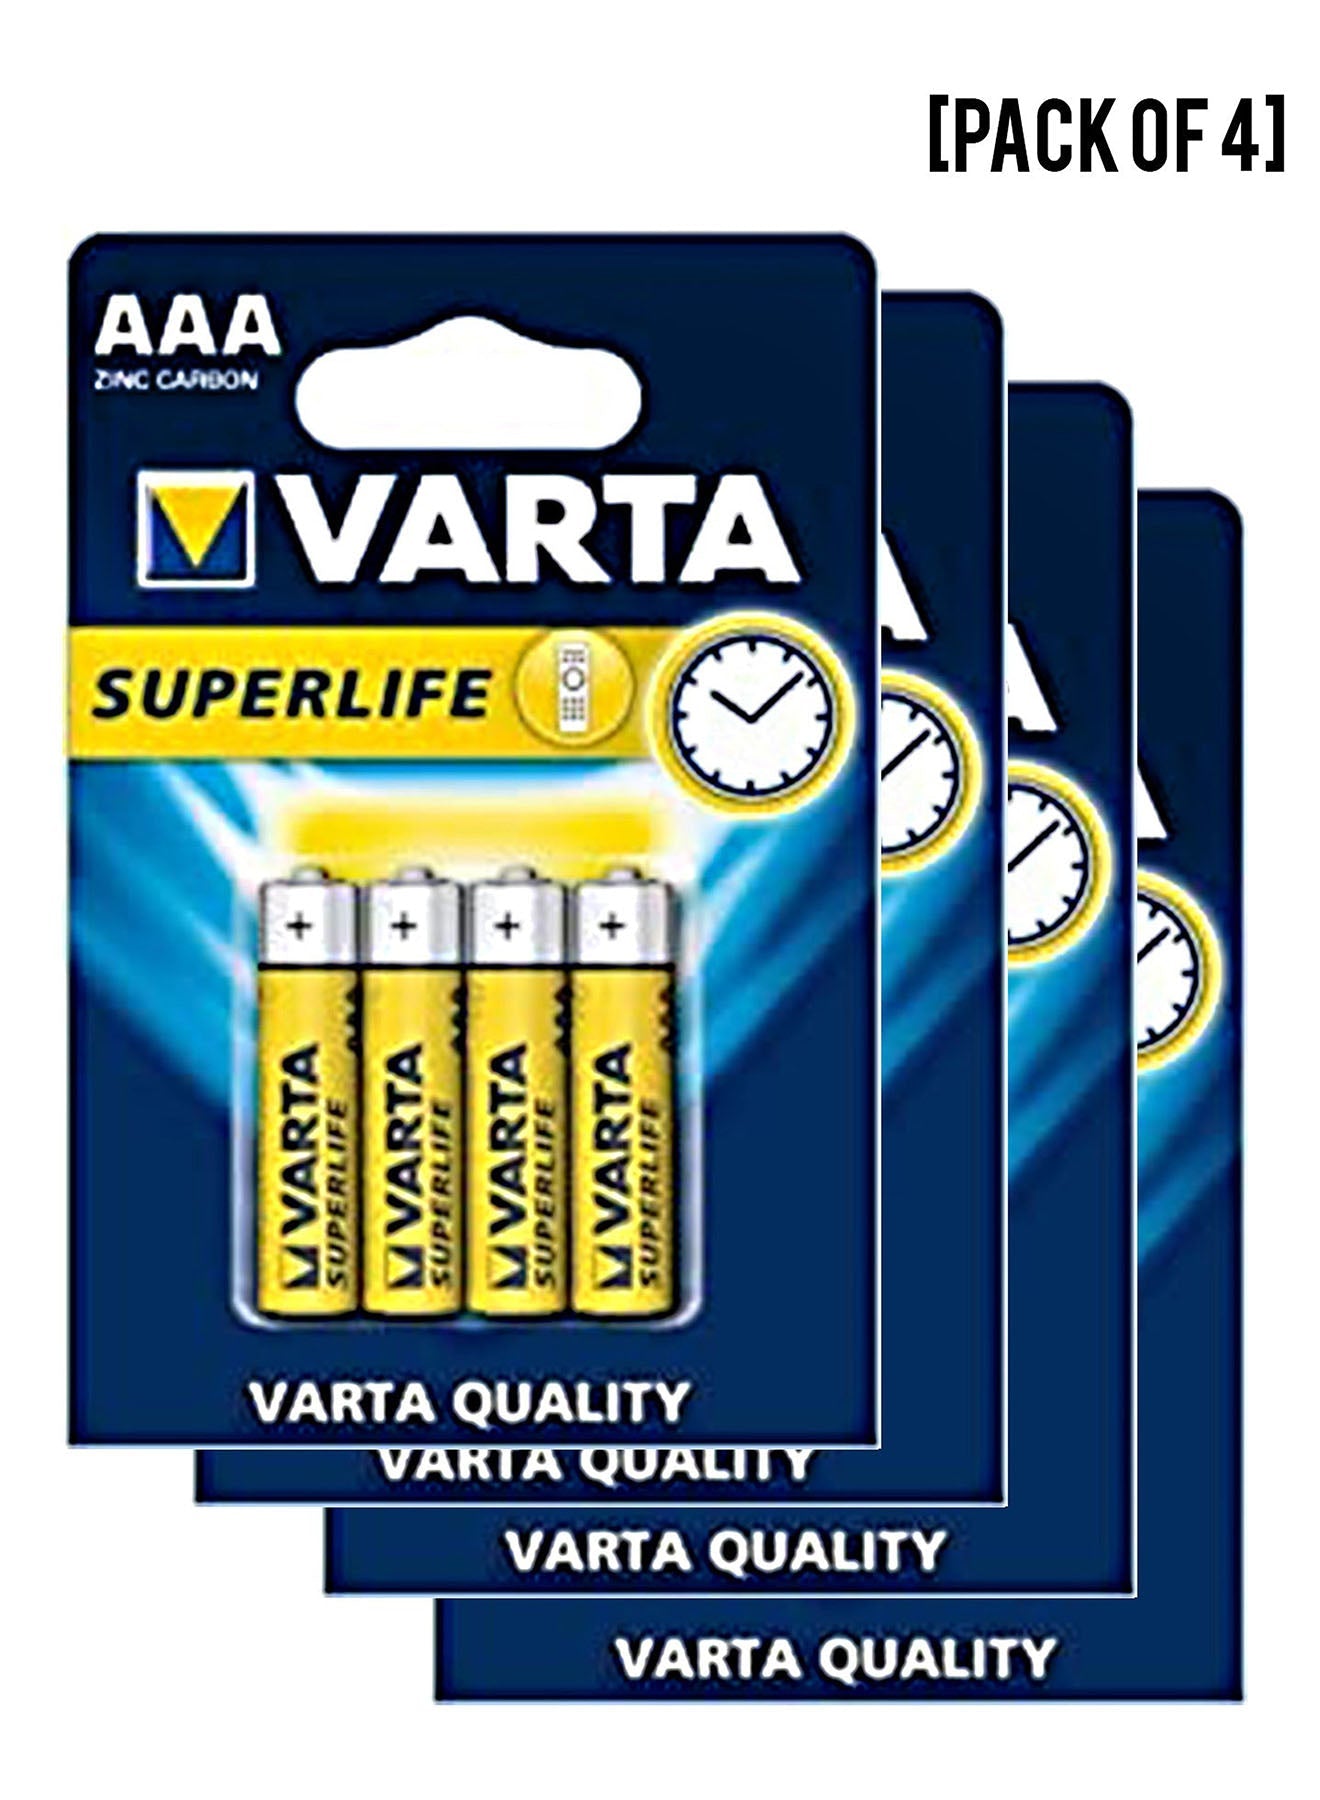 Varta Superlife AAA Battery 4 Units Value Pack of 4 